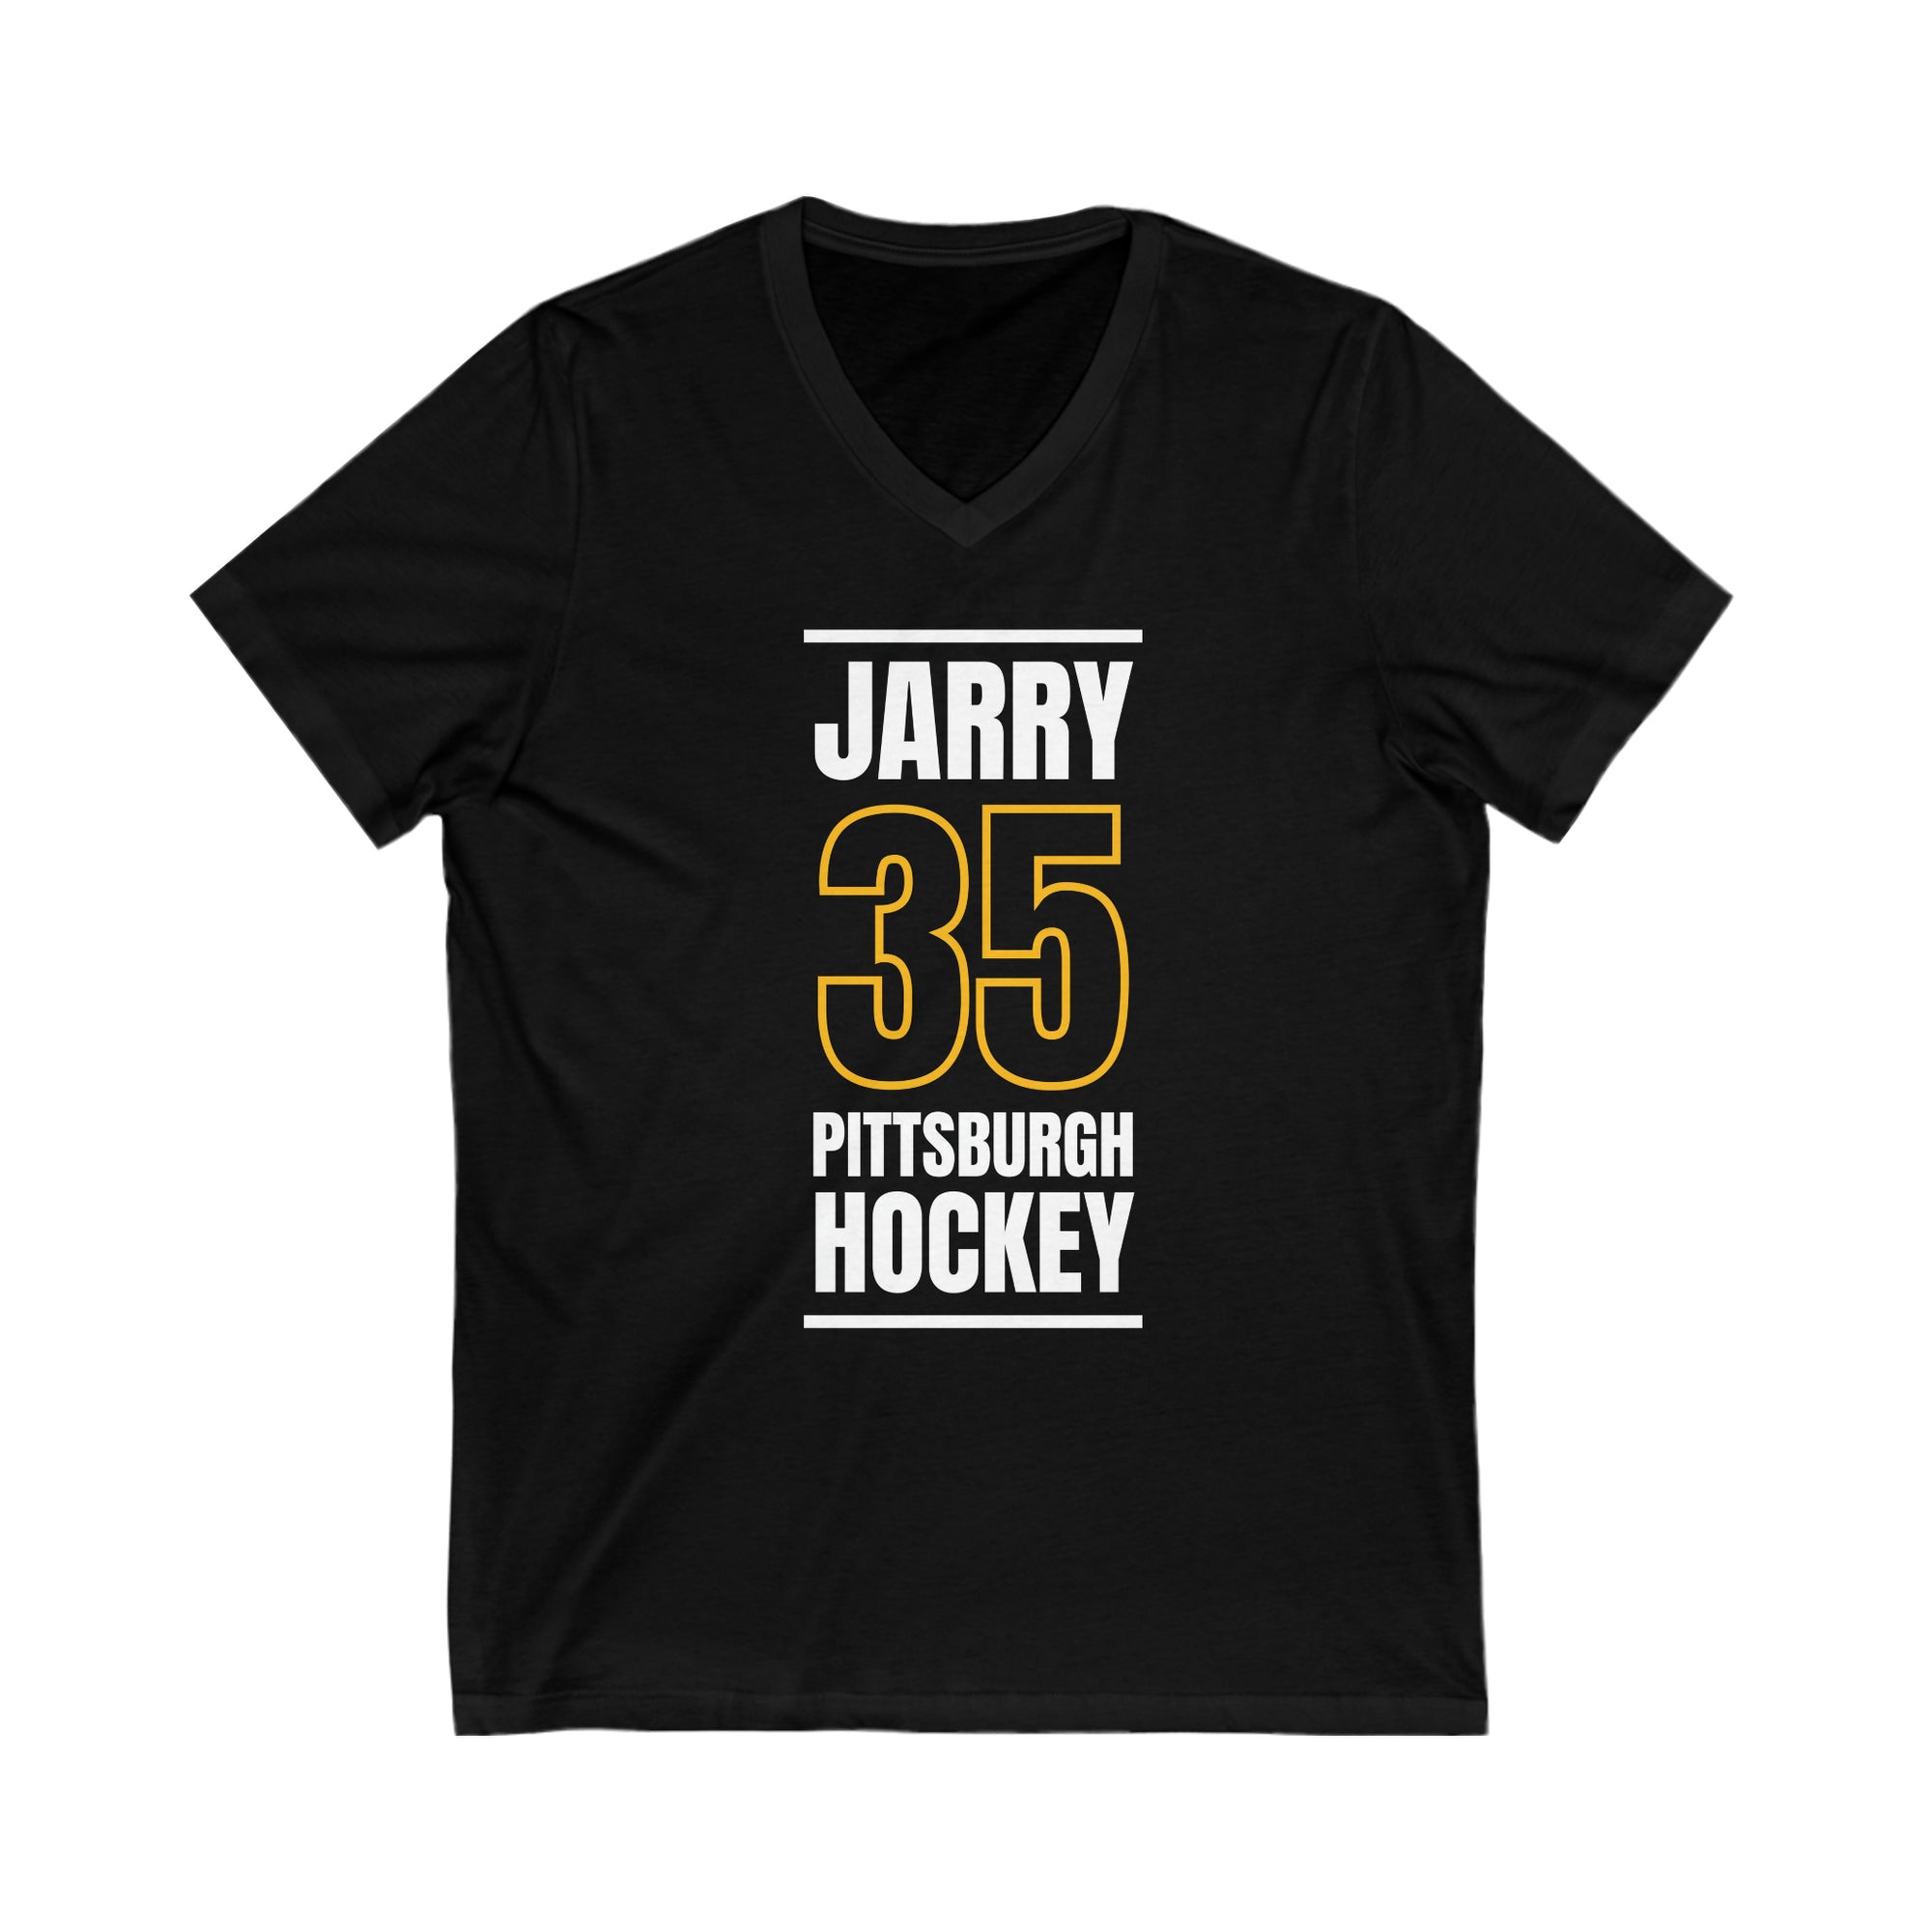 Jarry 35 Pittsburgh Hockey Black Vertical Design Unisex V-Neck Tee